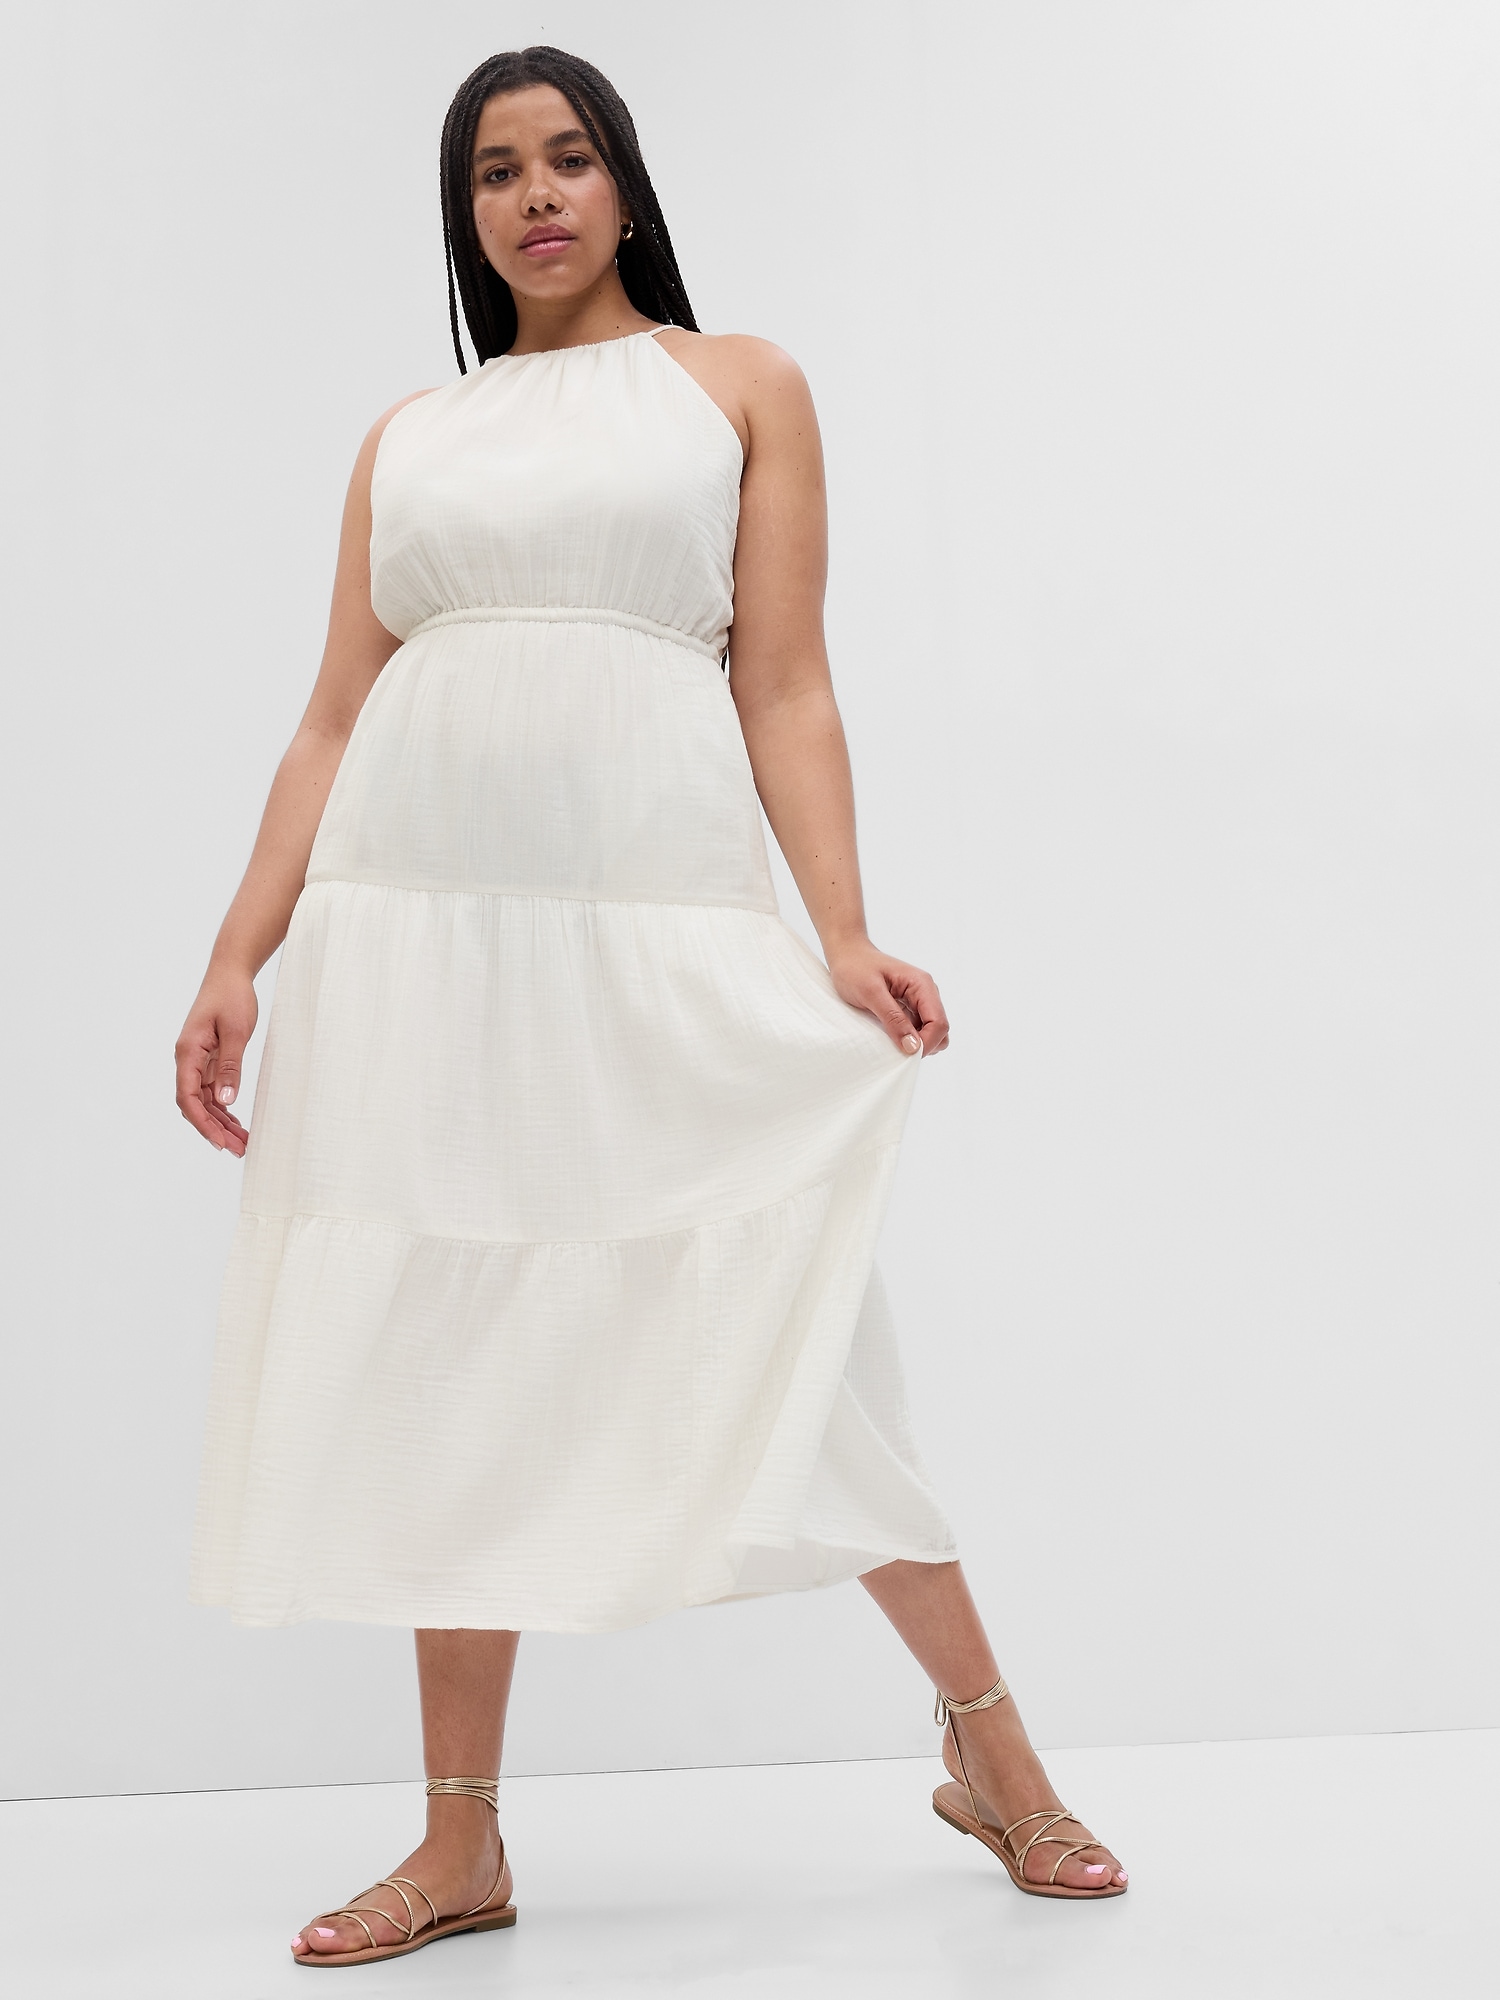 gap white dress